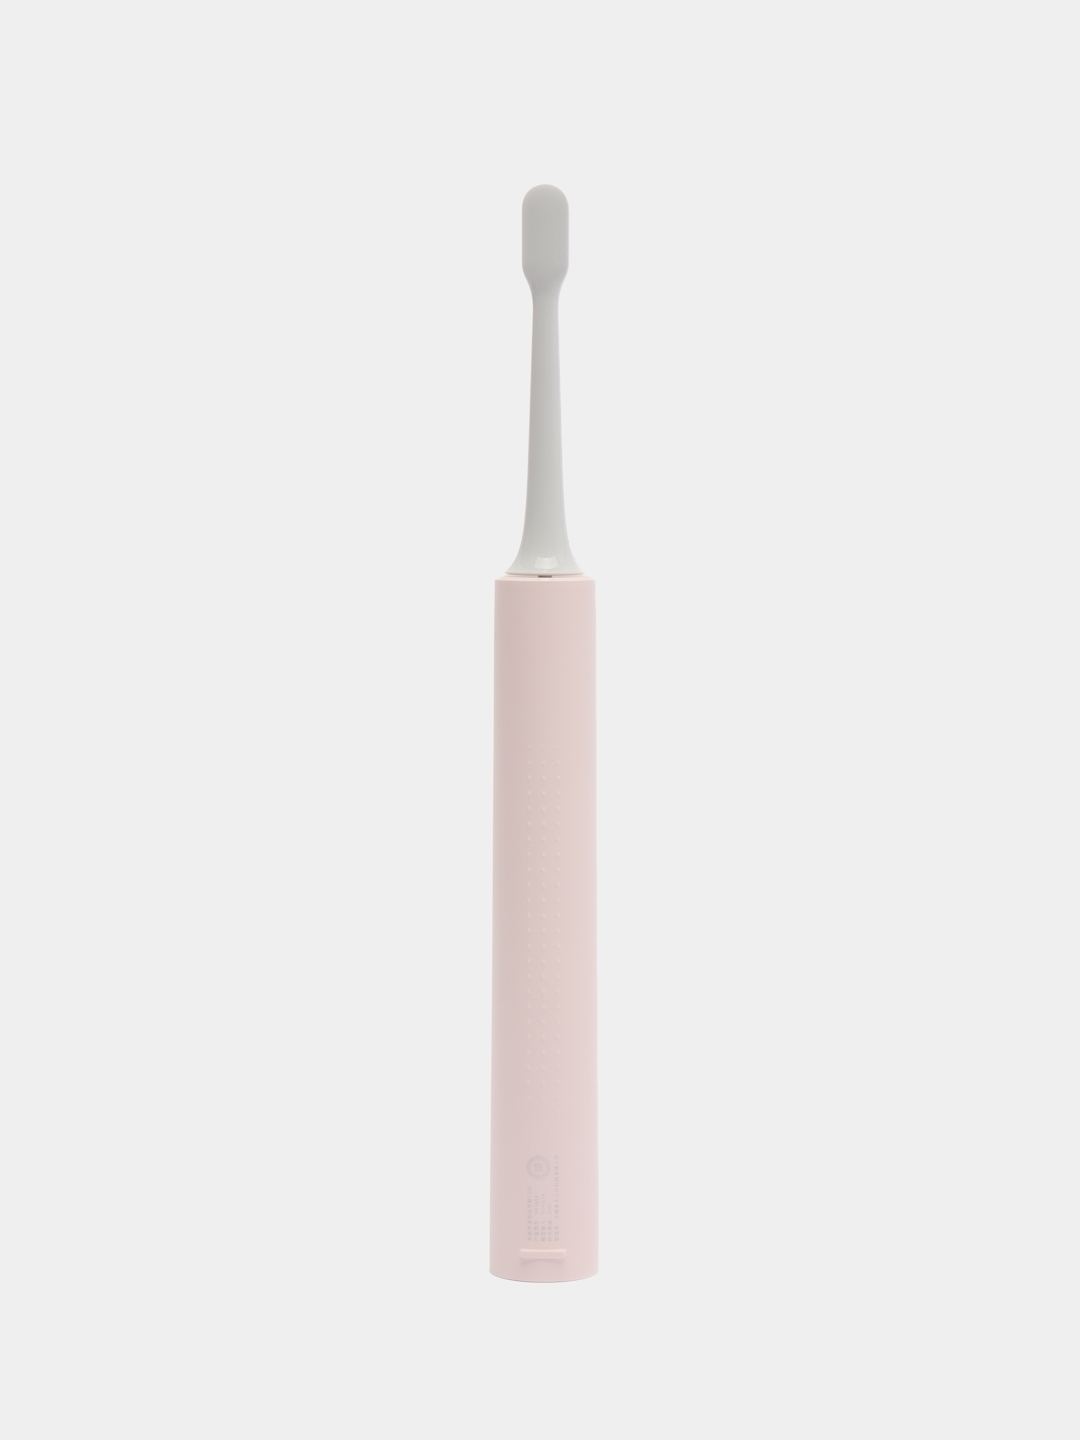 Xiaomi electric toothbrush t302